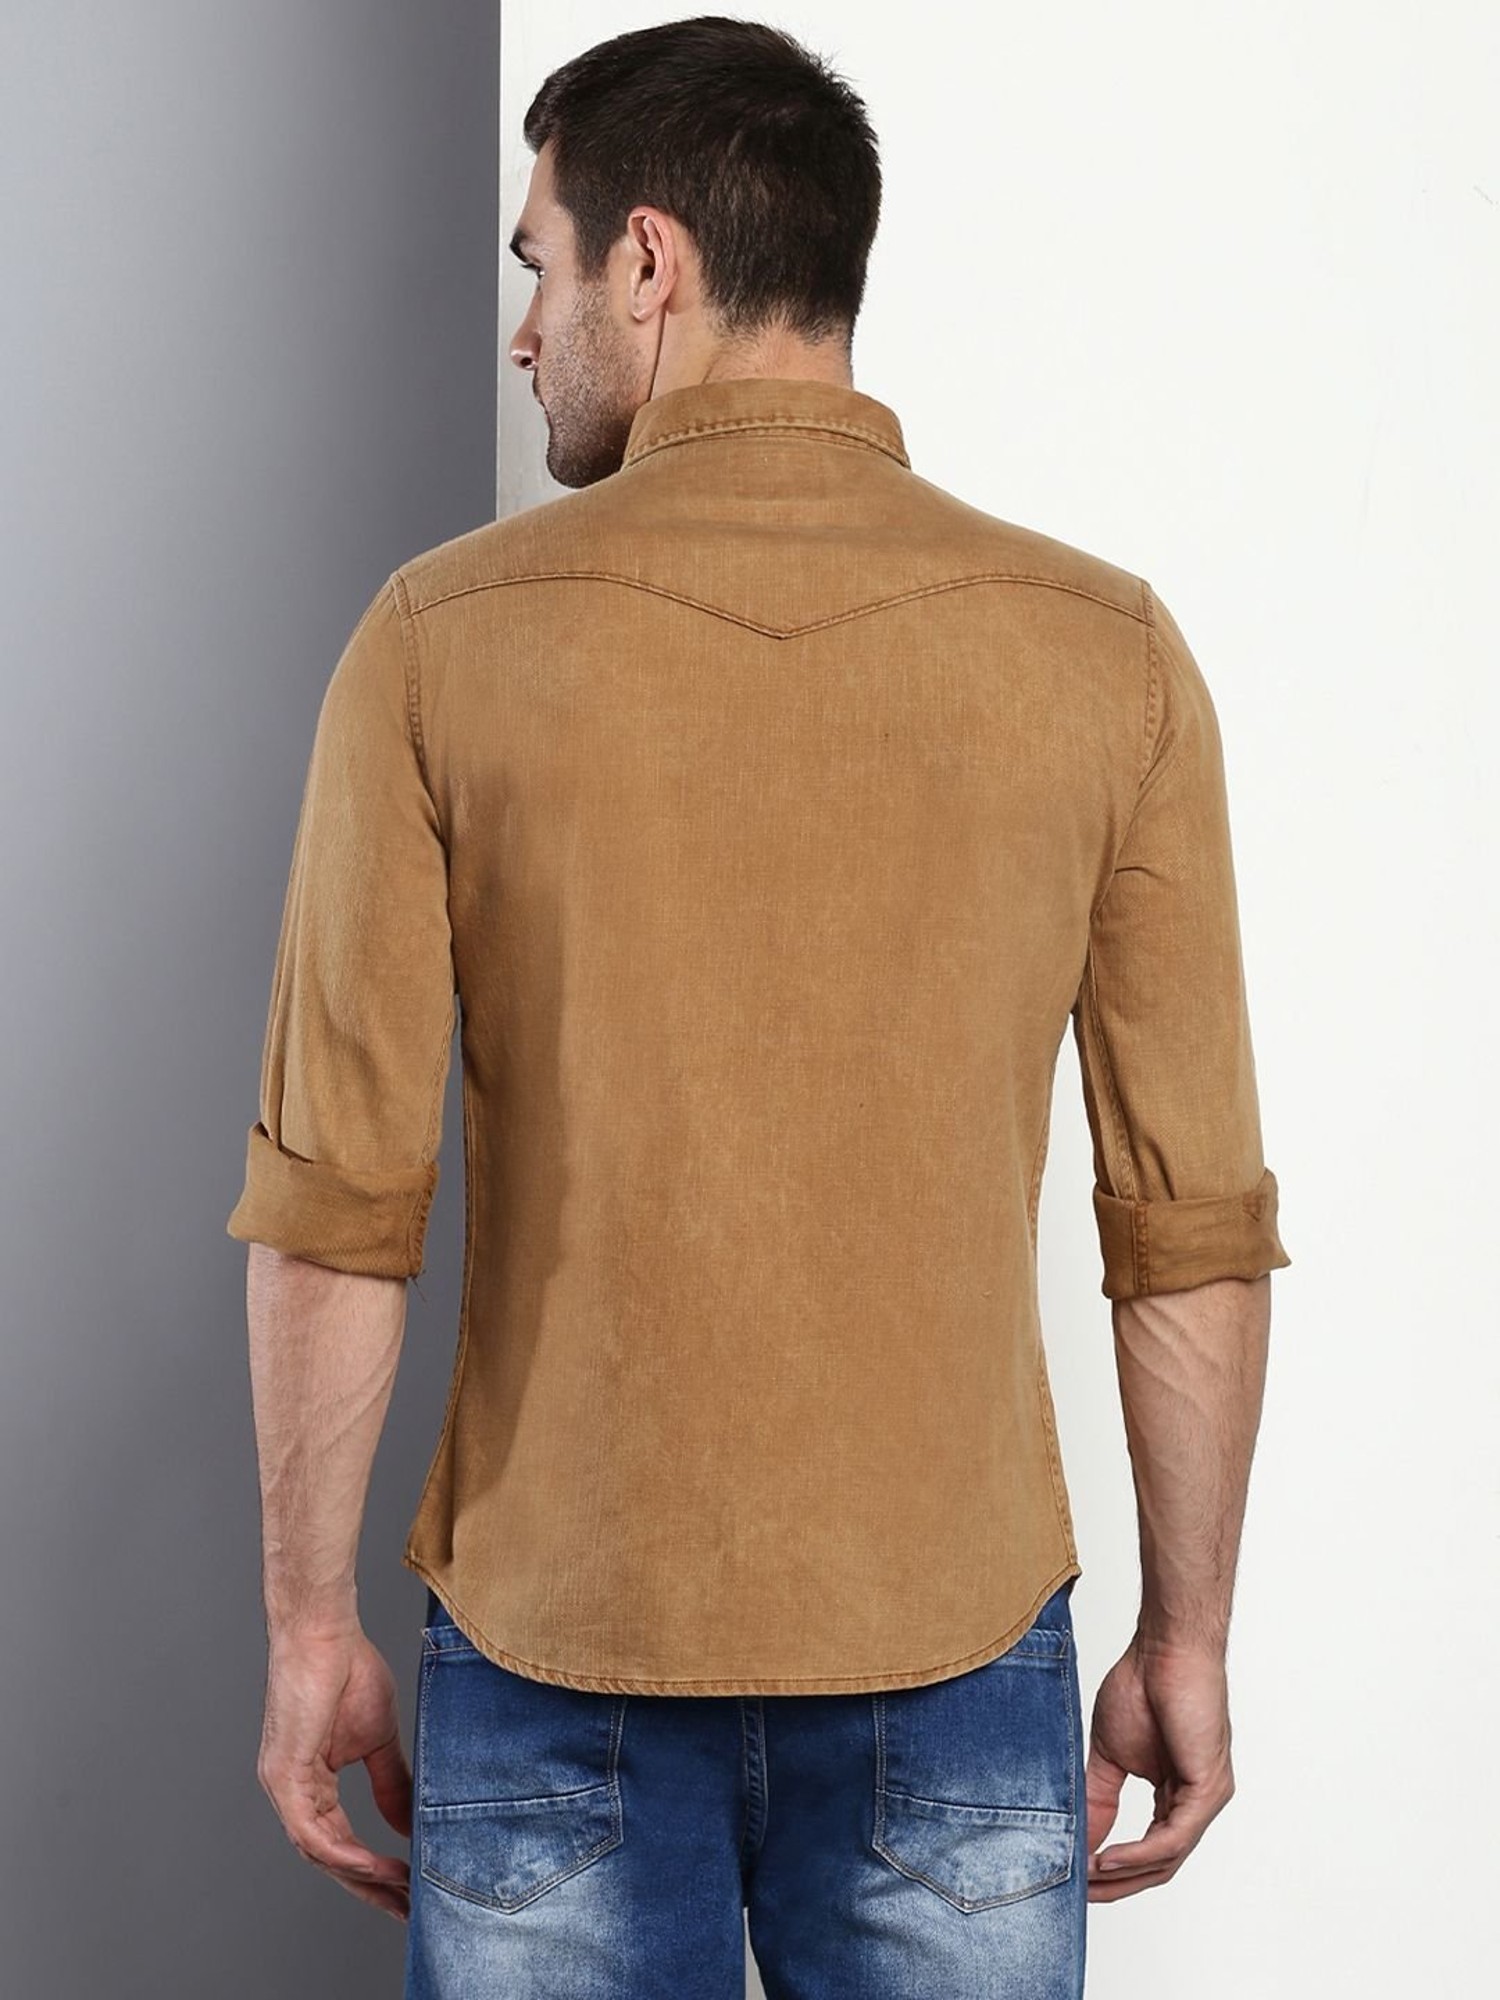 Brown Tweed Sport Coat with Denim Shirt | He Spoke Style-calidas.vn